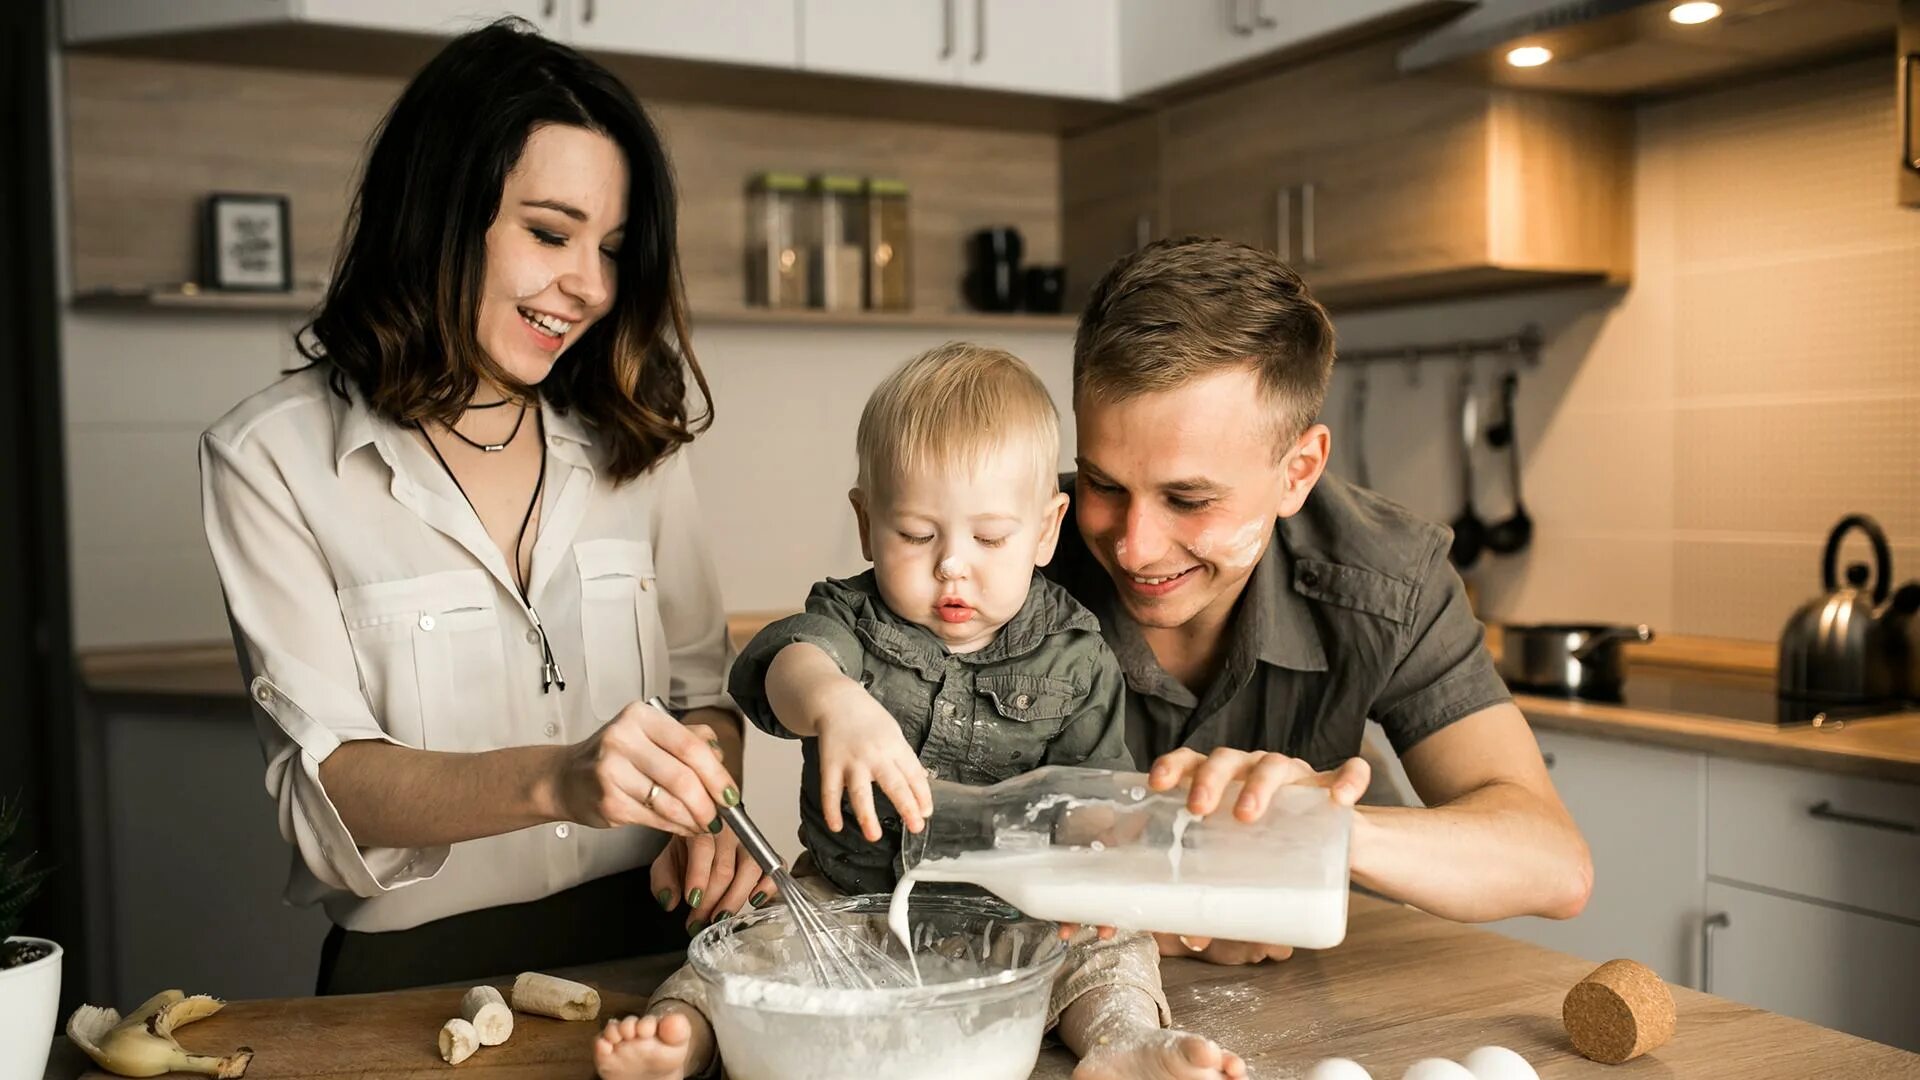 Семья на кухне. Семья с детьми на кухне. Семья на современной кухне. Фотосессия на кухне. Семейное видео мужчины